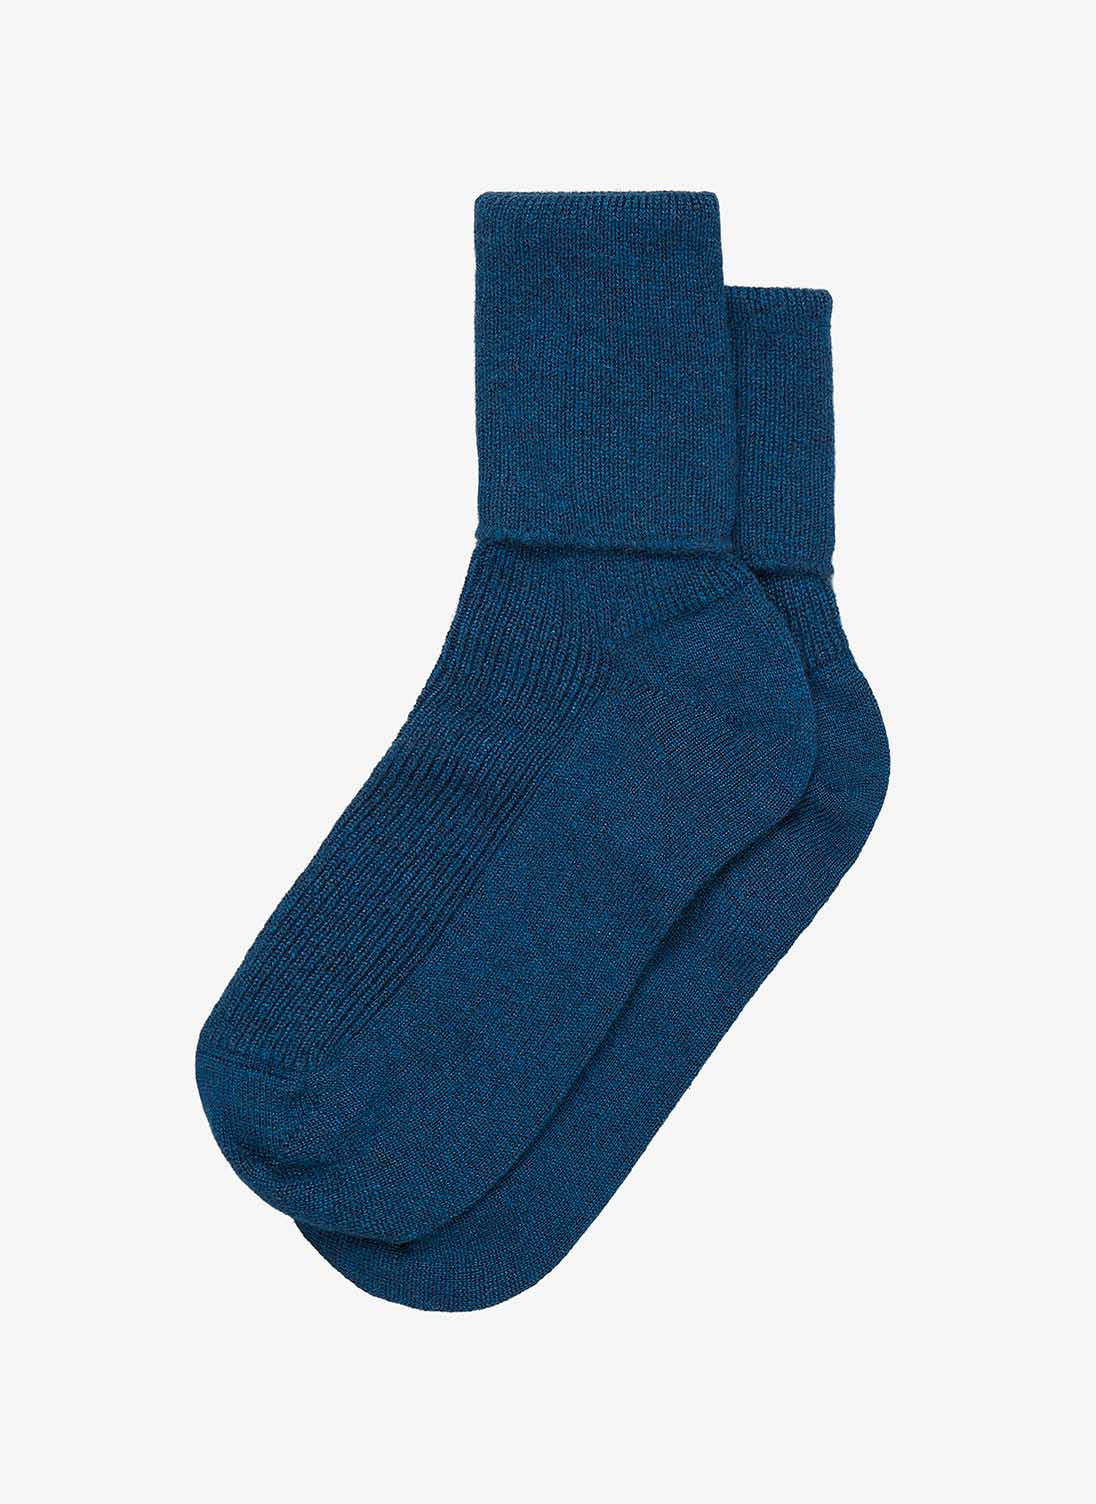 Women's Cashmere Socks Sapphire